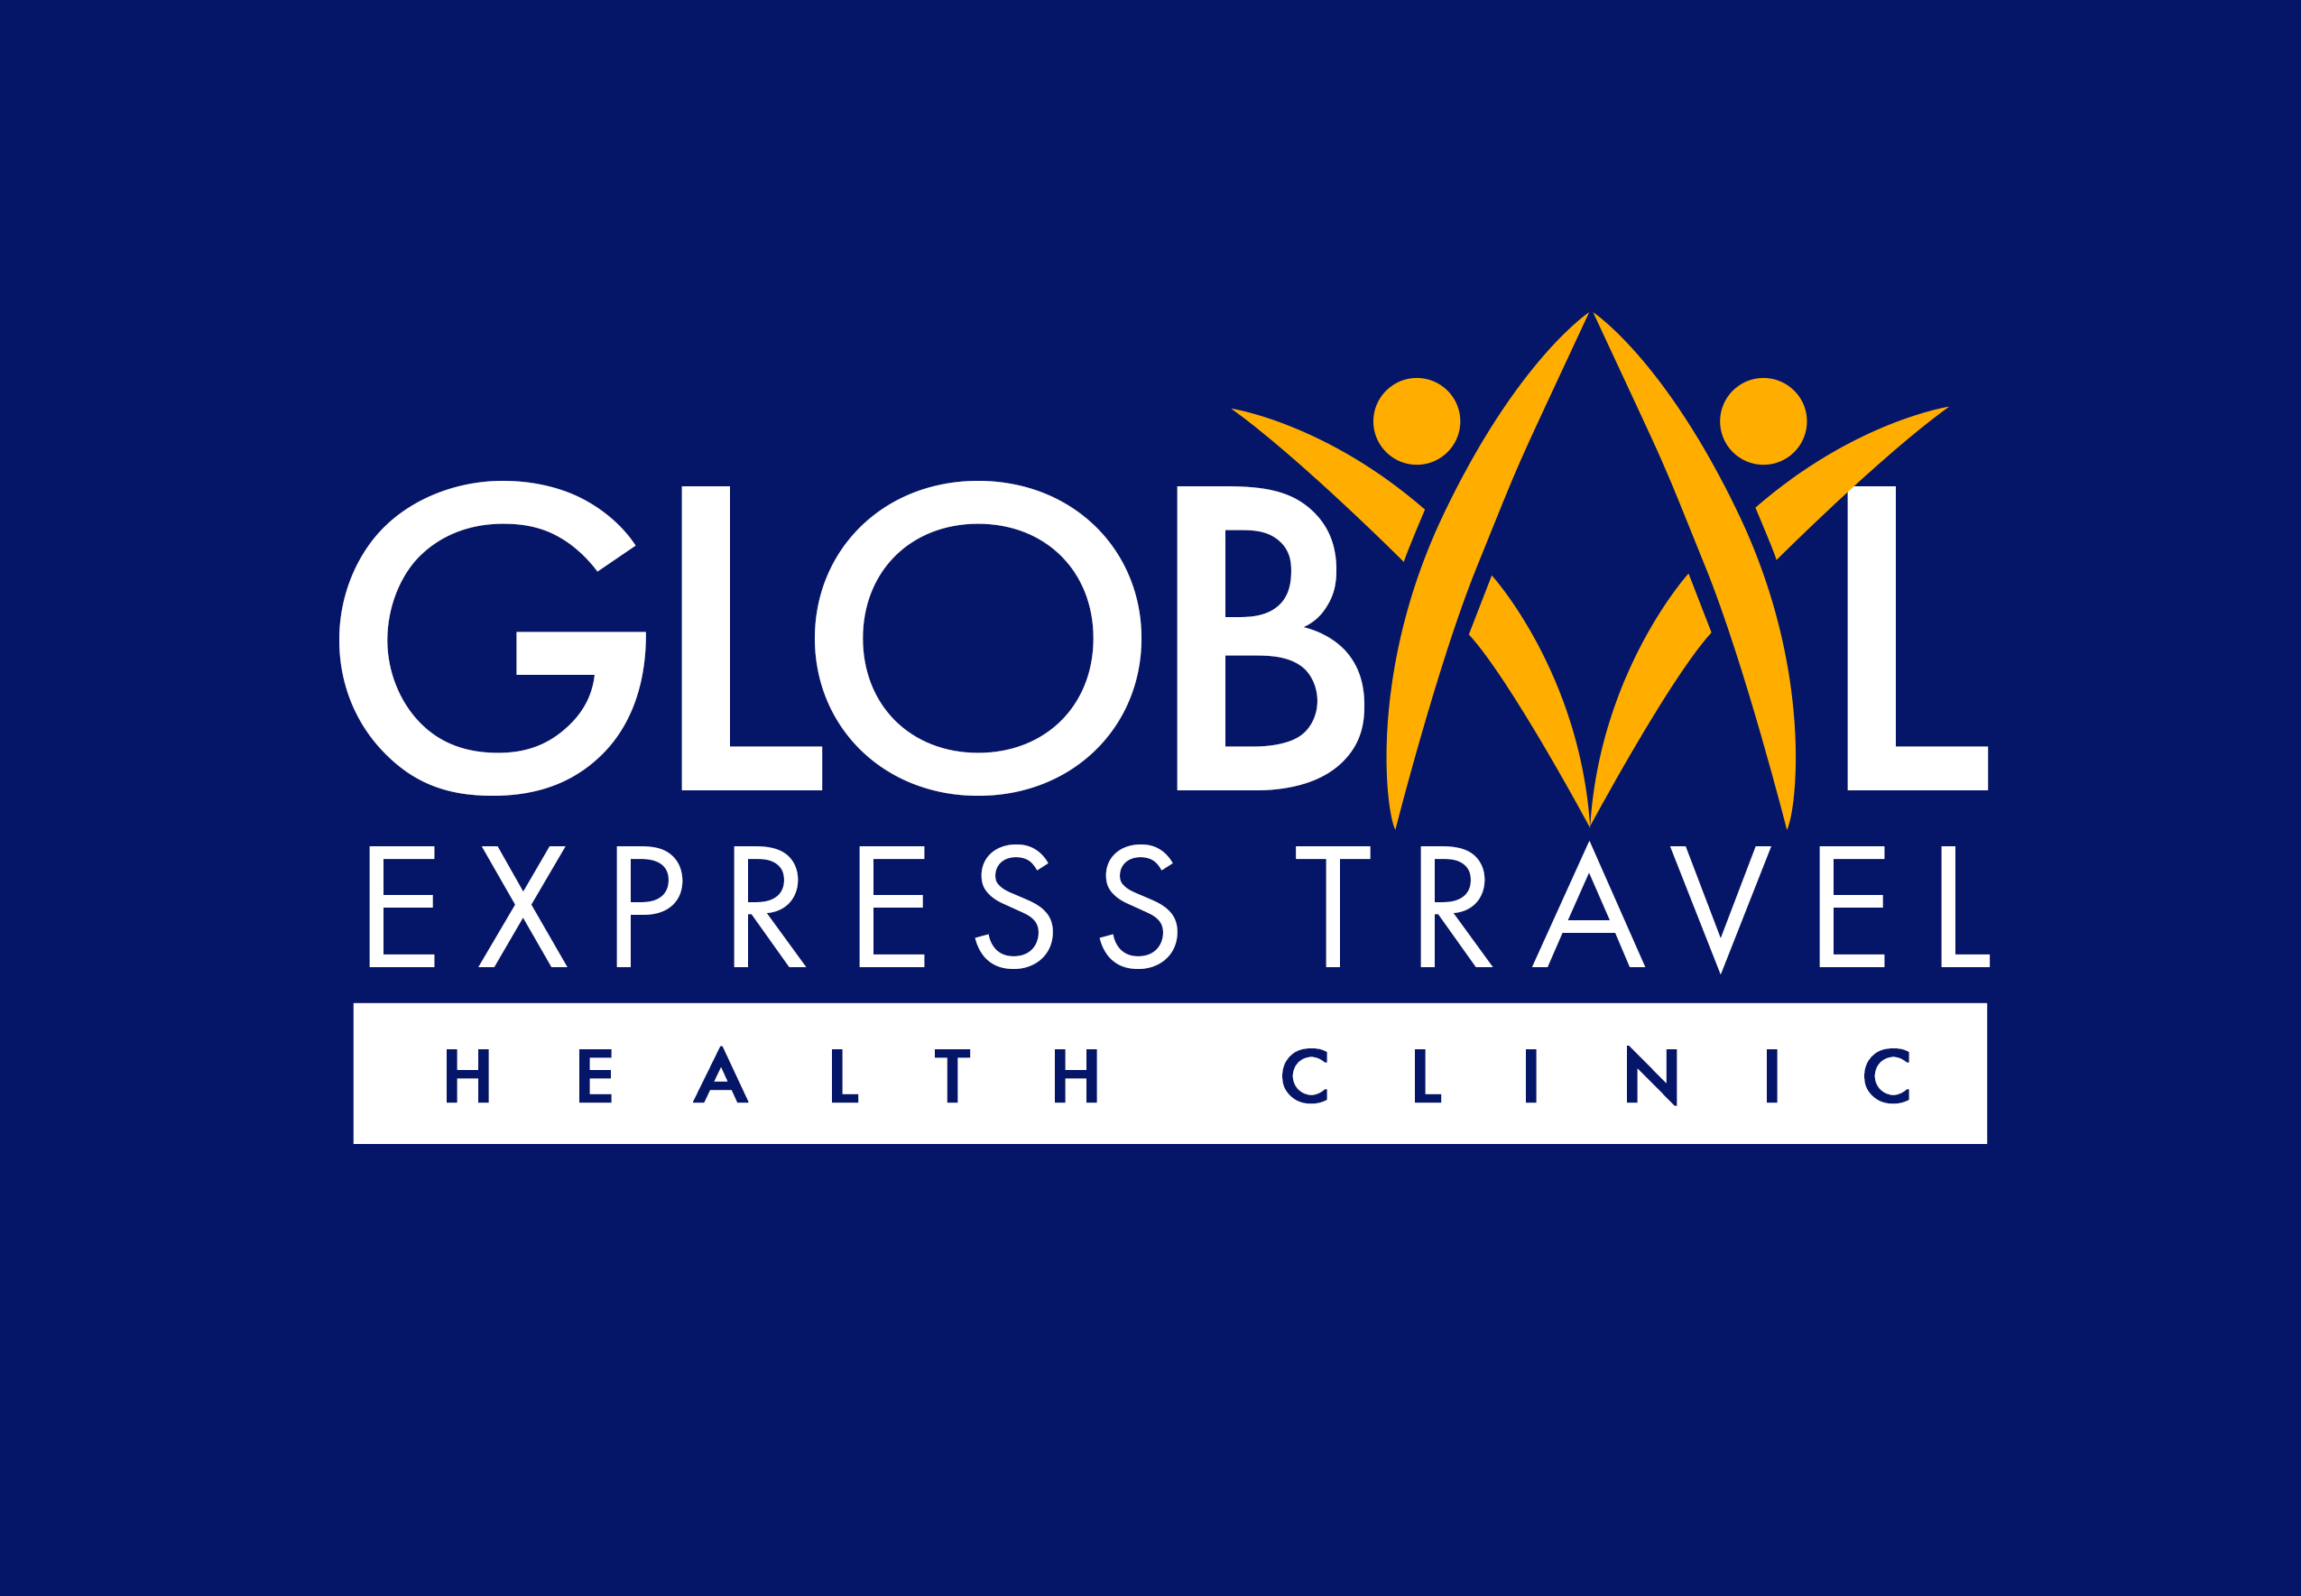 Global Express Travel Health Clinic company logo